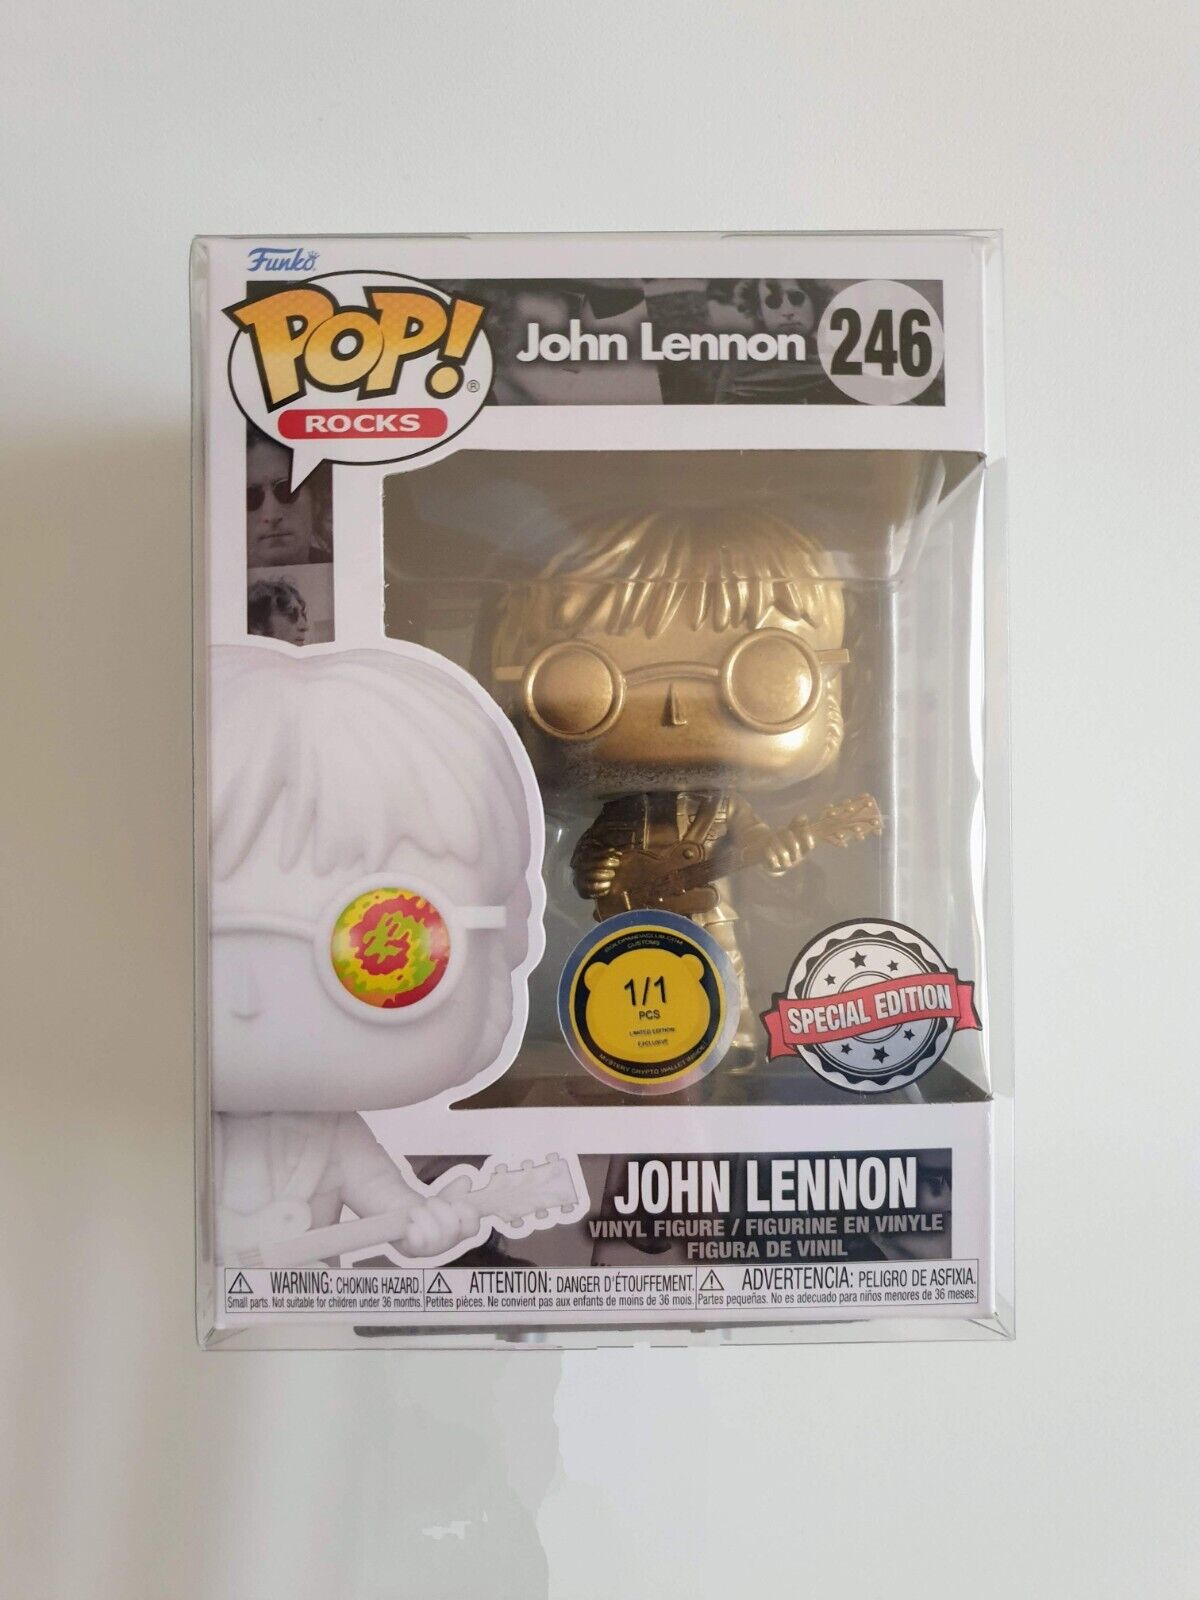 Exclusive 1-1 Gold Panda Club Custom Funko Pop Rocks John Lennon (246)